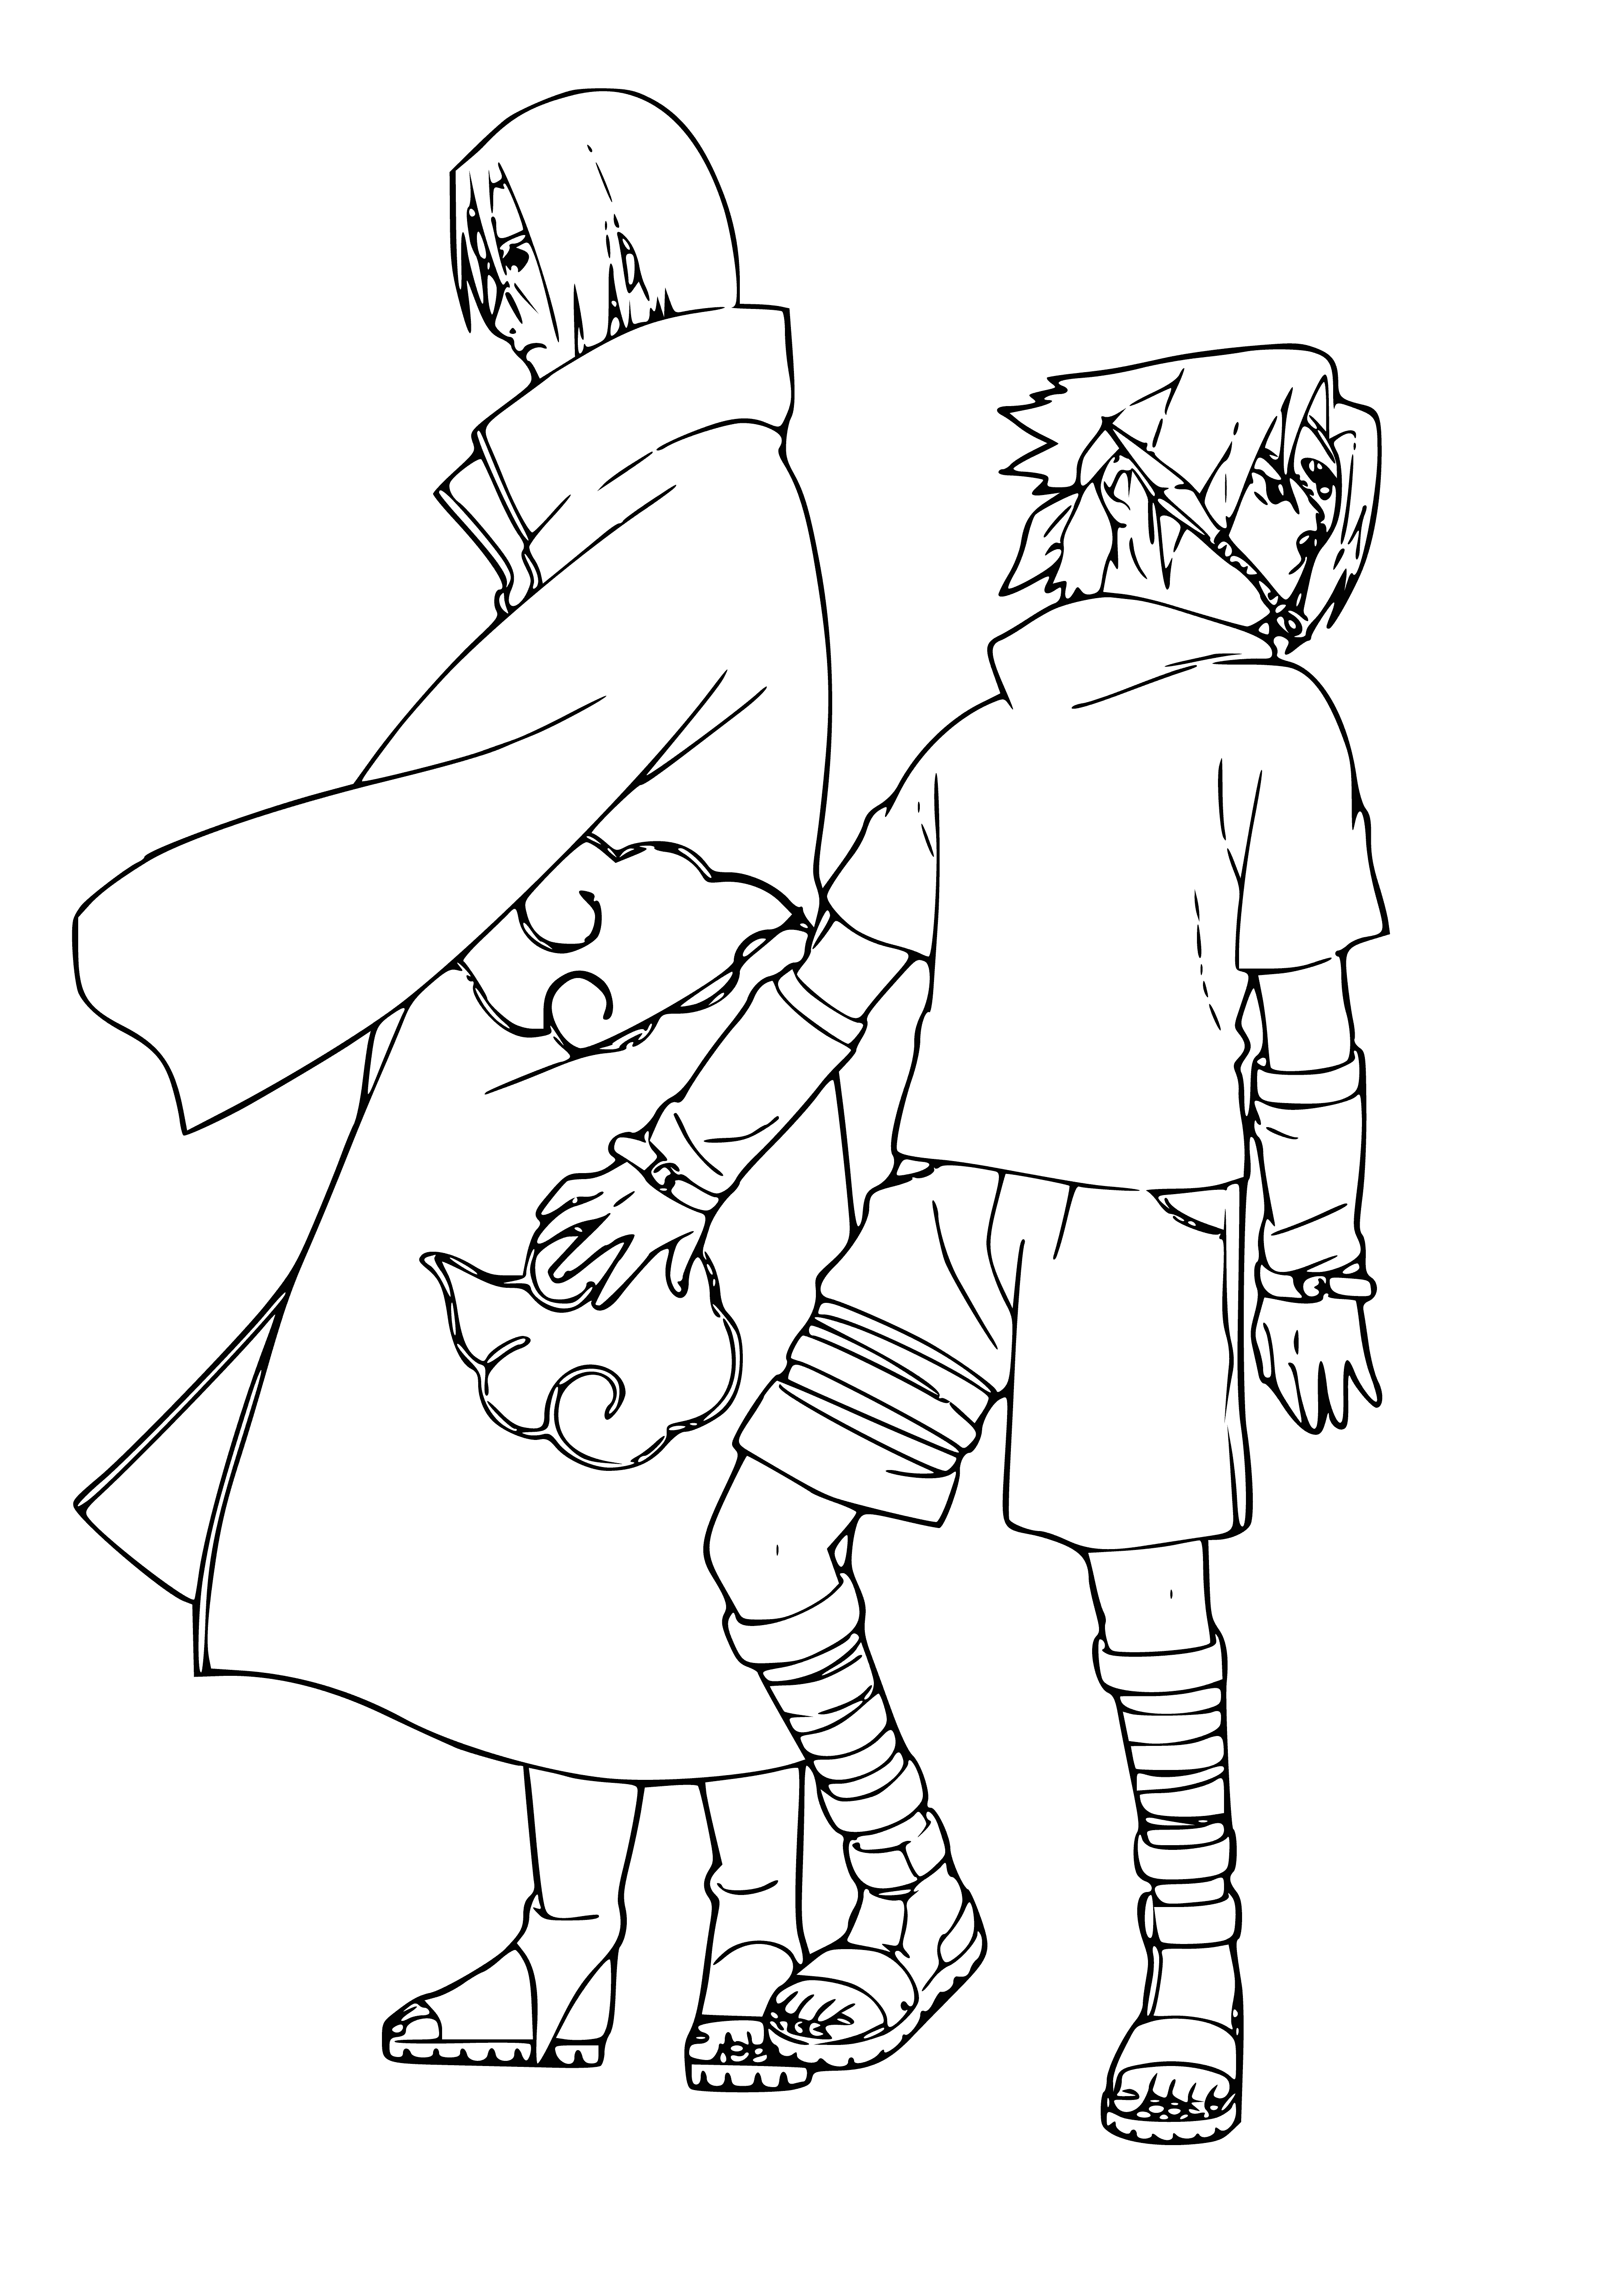 Sasuke and Itachi coloring page